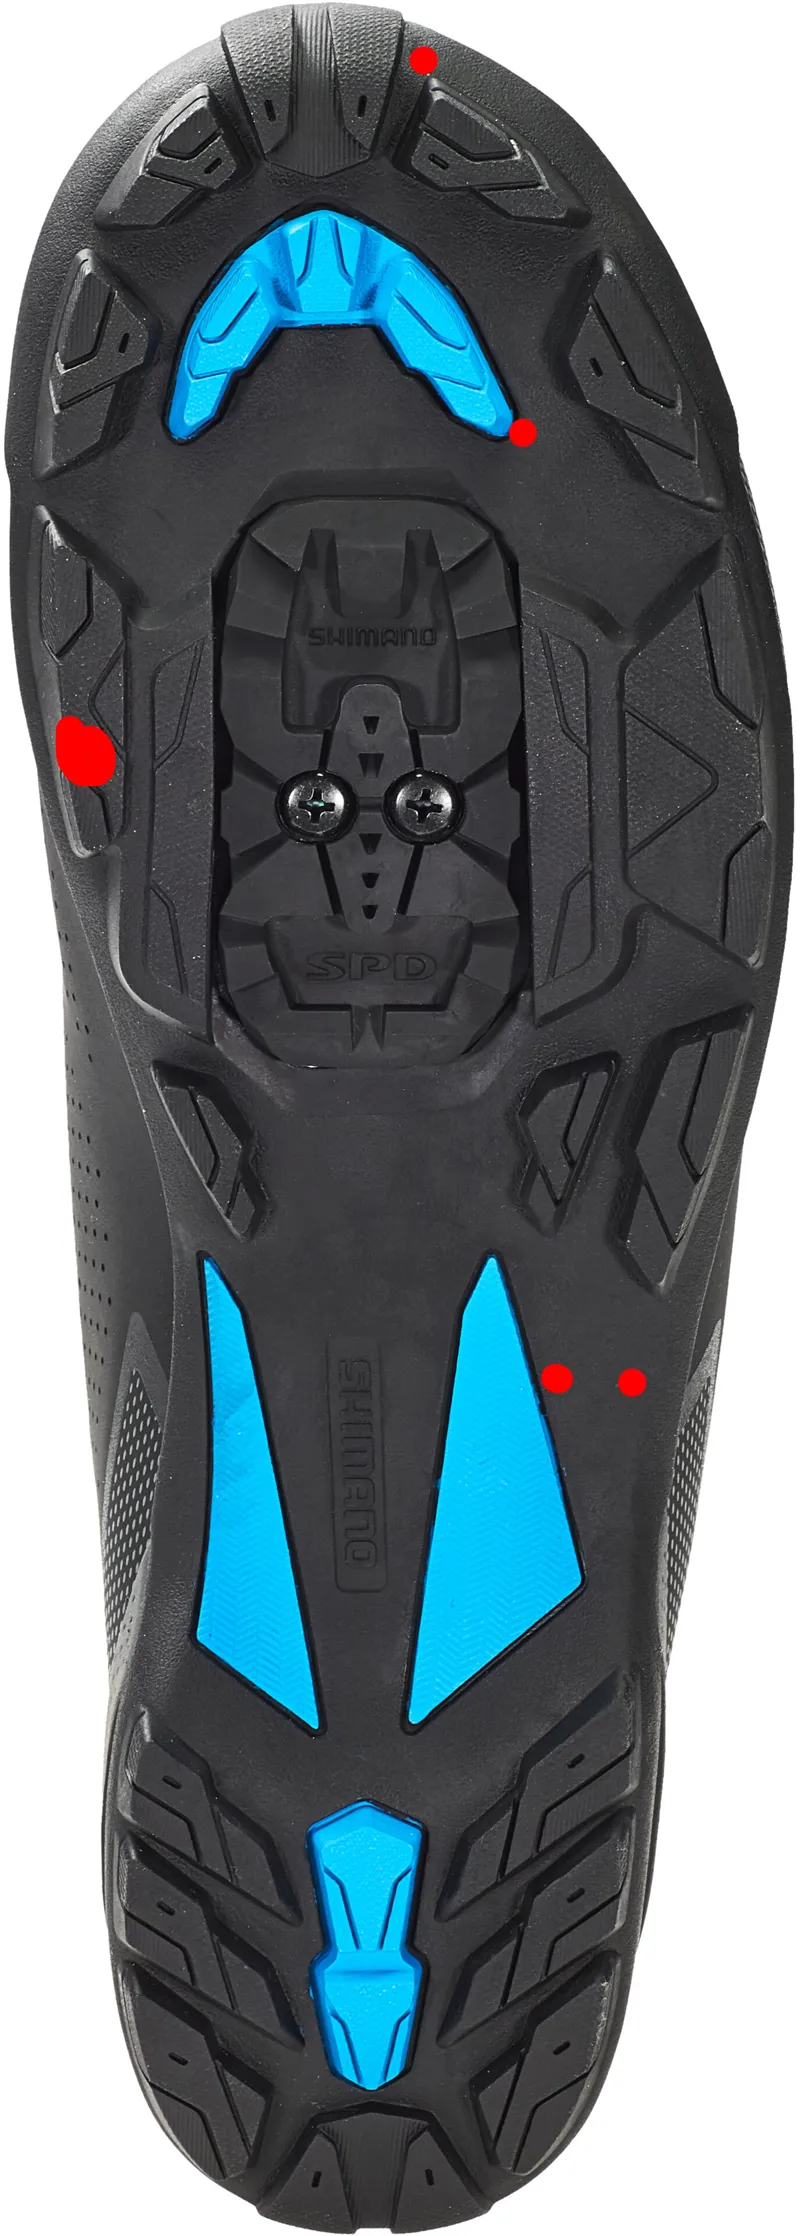 Shimano MT301 SPD MTB Shoe Black/Blue